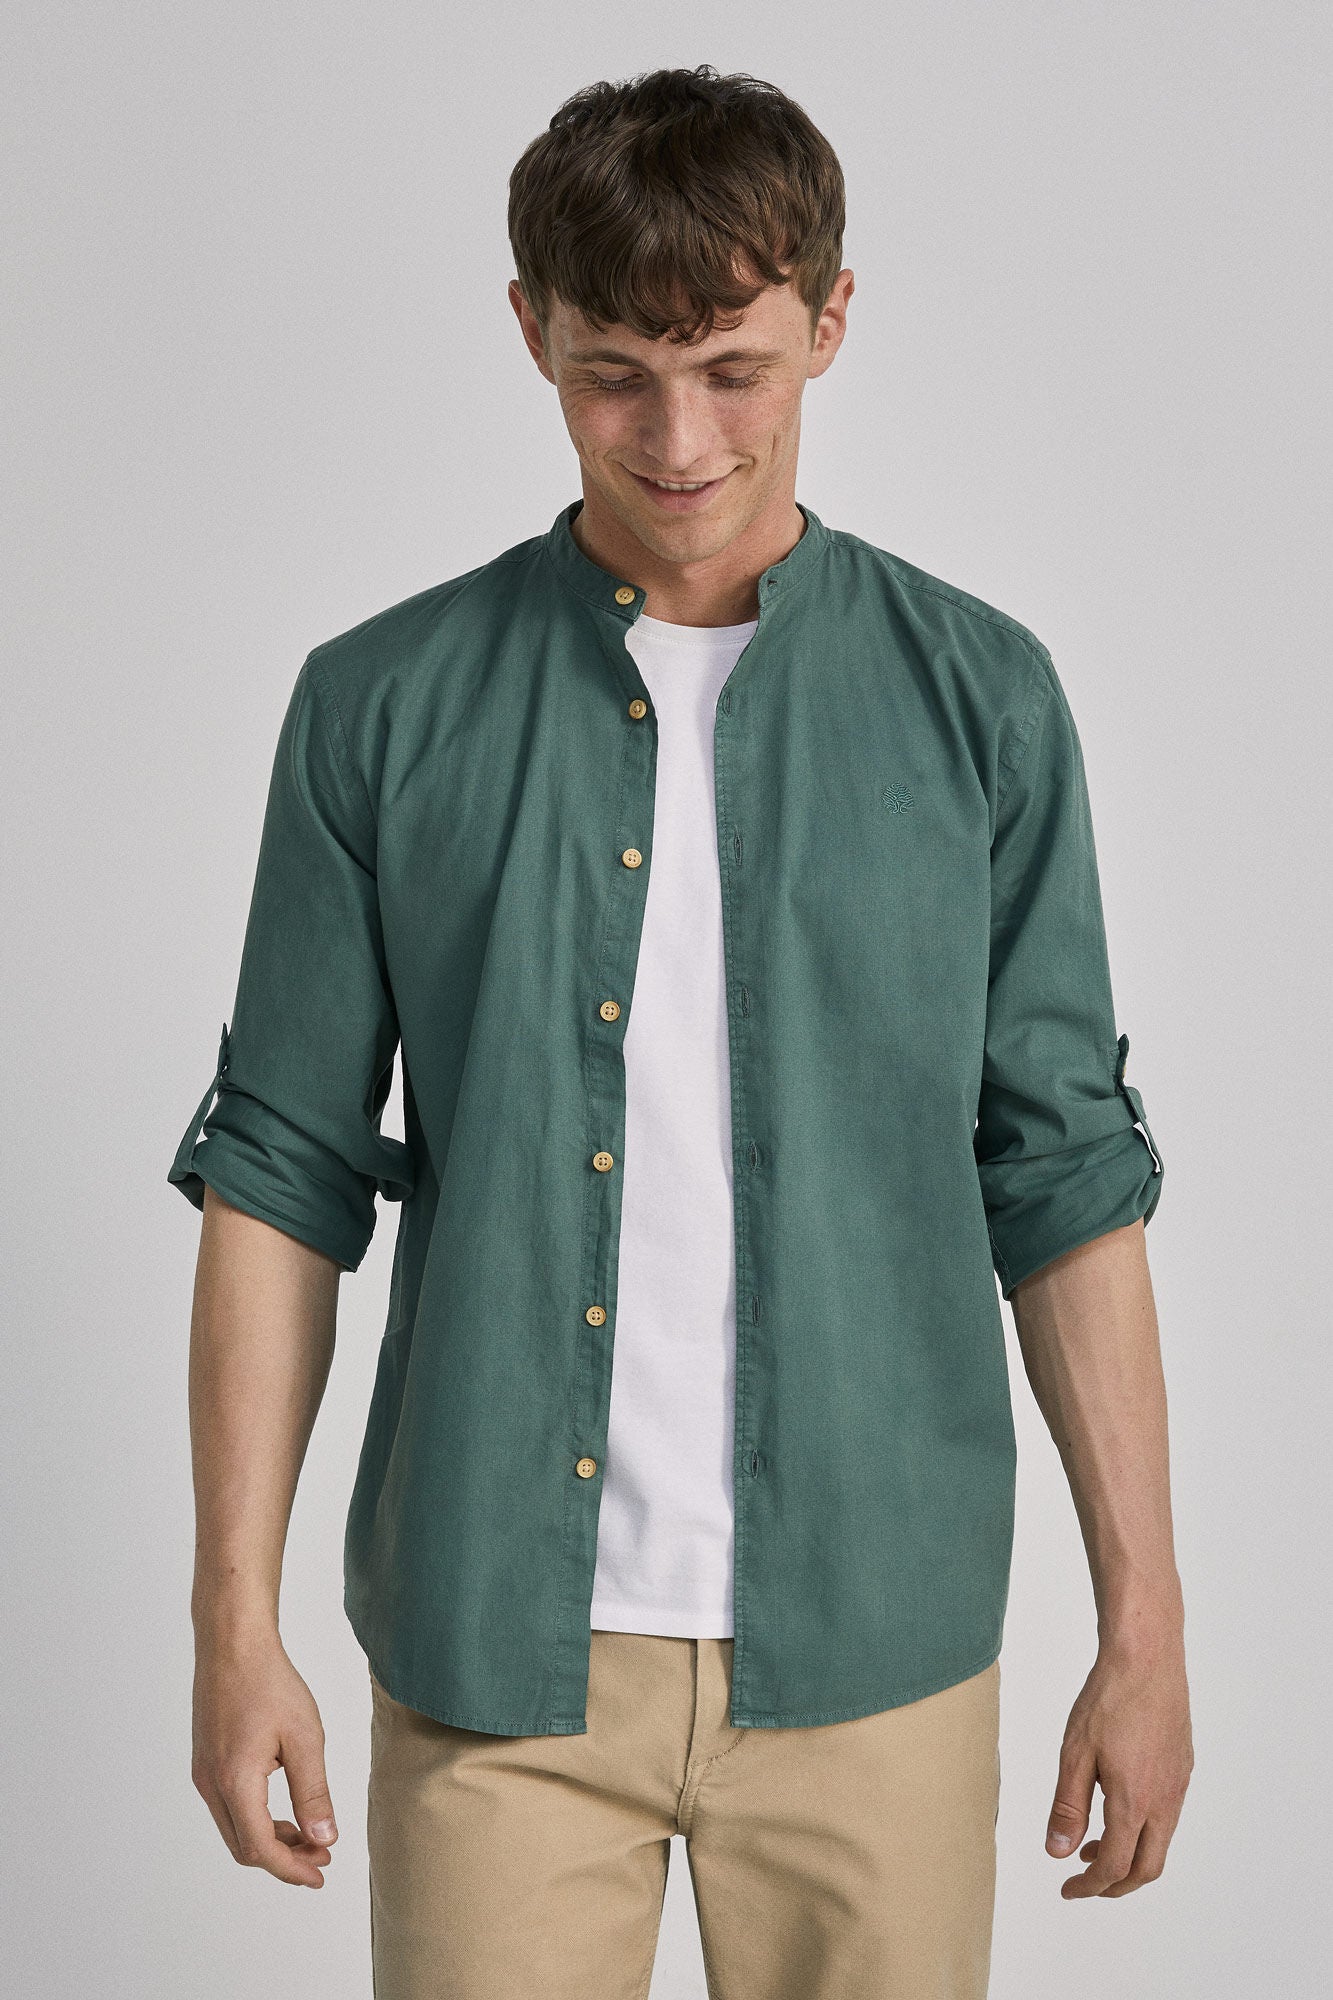 Mandarin Collar Shirts - Buy Mandarin Collar Shirts Online Starting at Just  ₹254